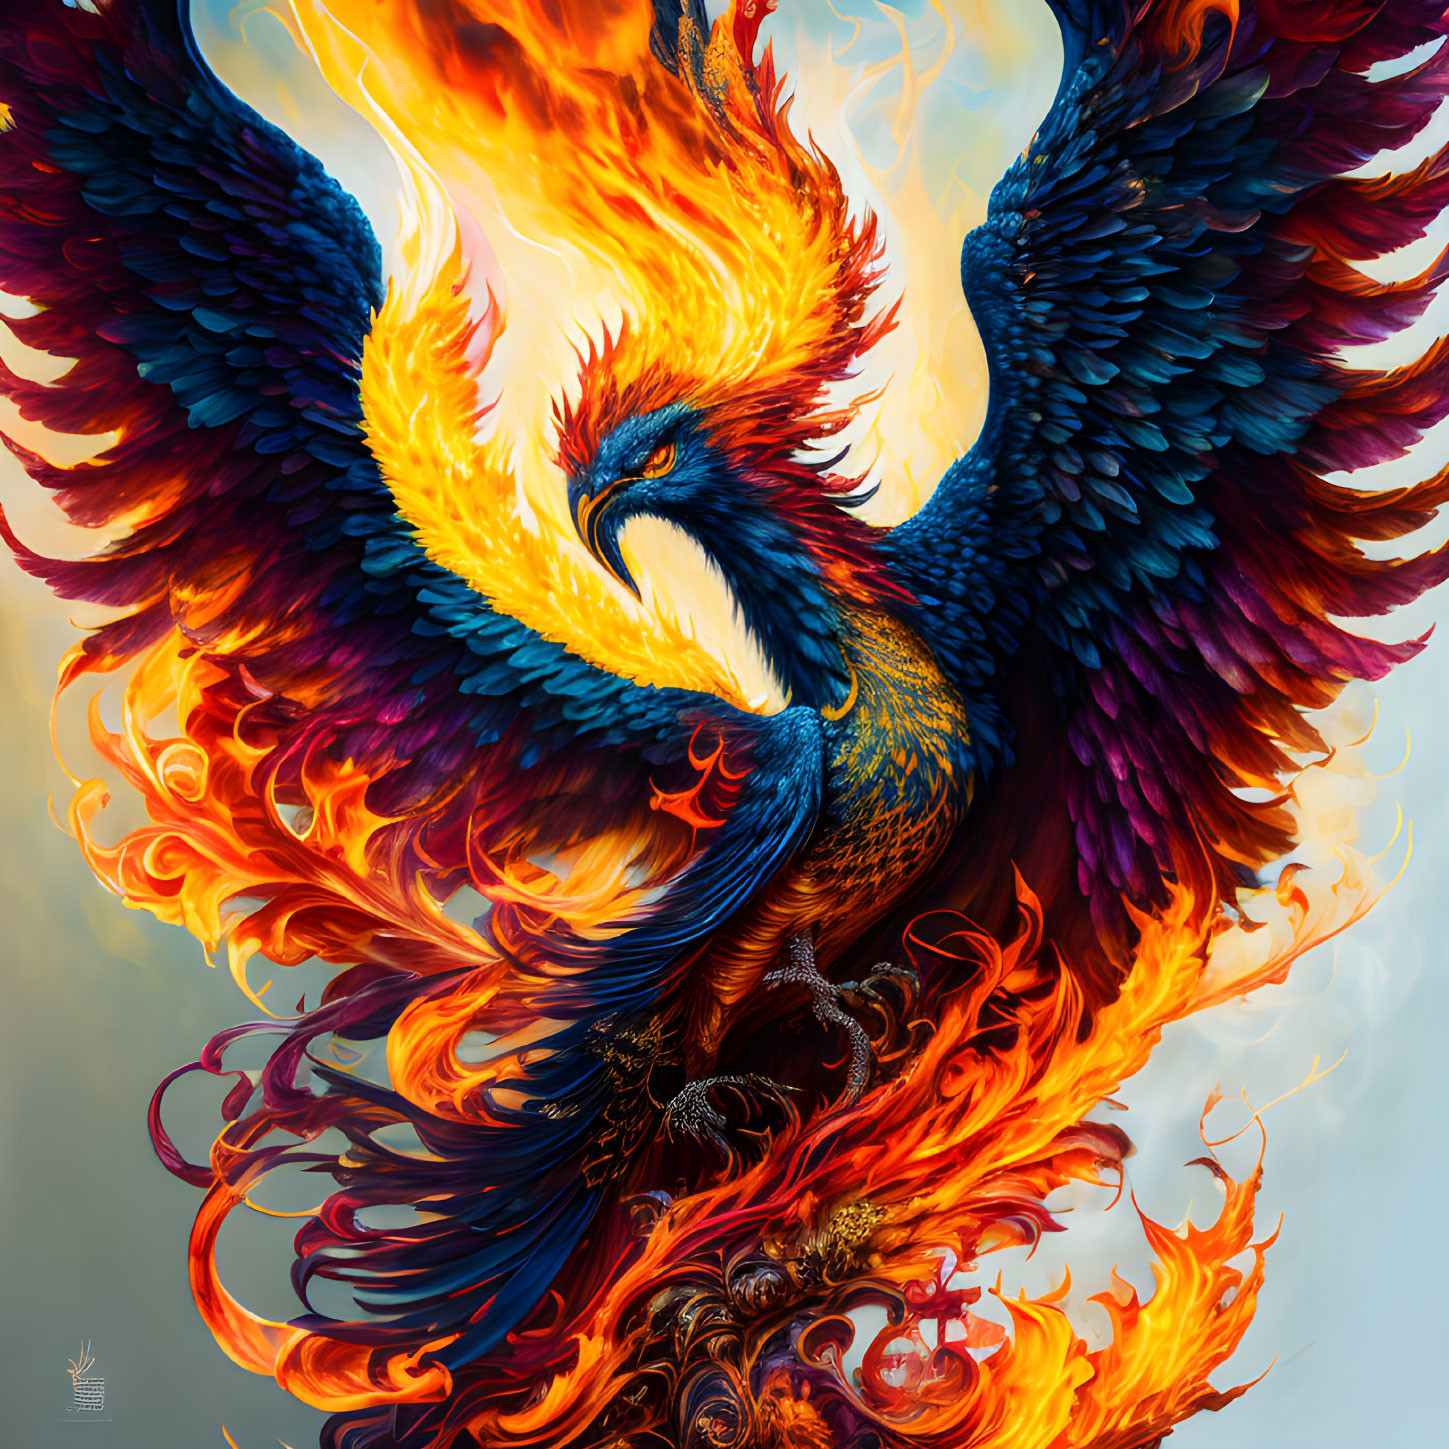 Colorful Phoenix Symbolizing Rebirth and Power